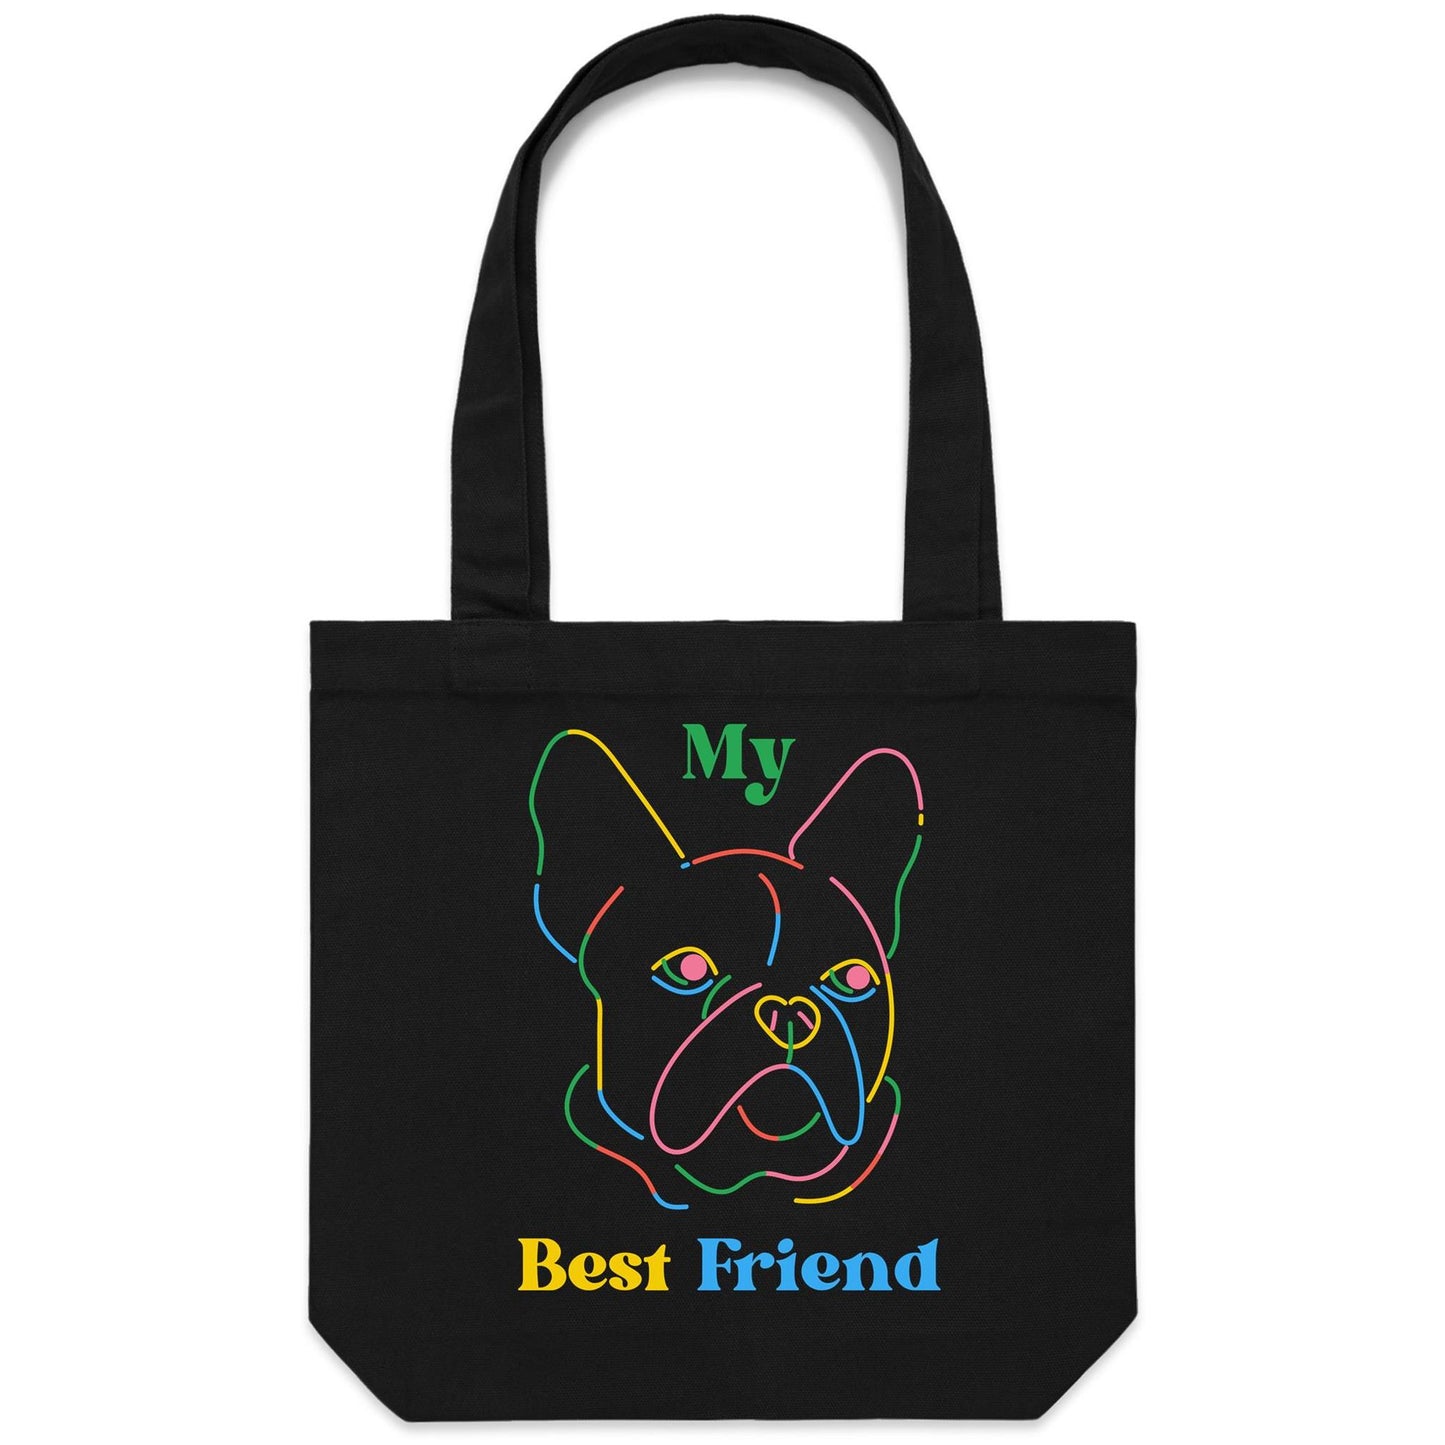 My Best Friend, Dog - Canvas Tote Bag Default Title Tote Bag animal